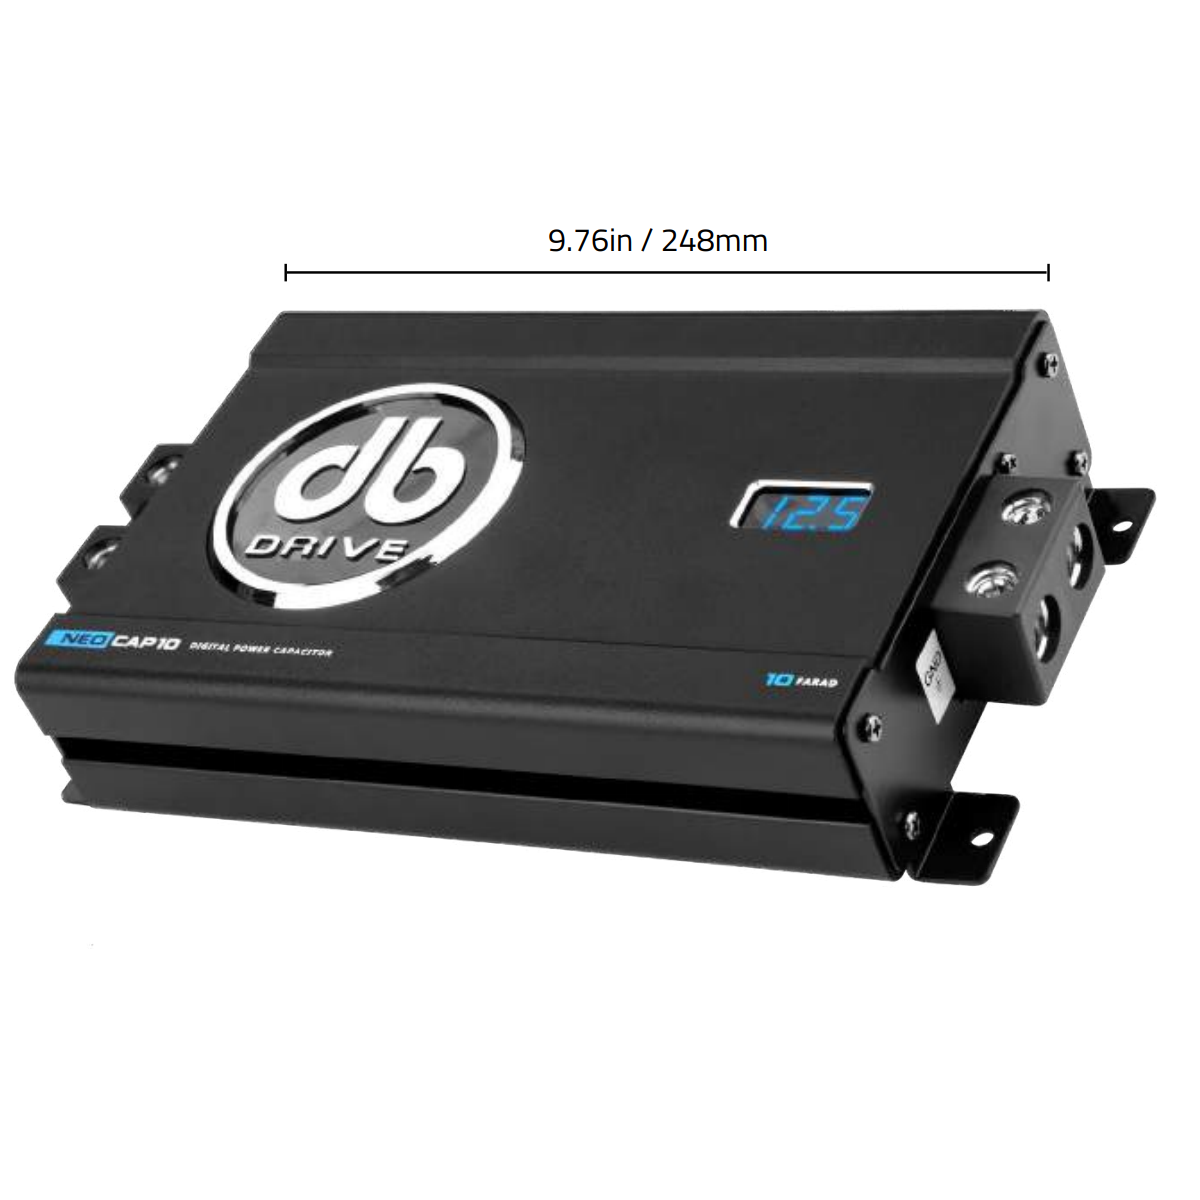 Capacitor Digital DB Drive NEOCAP10 10 Faradios 12-24 Volts Calibres 0 y 4